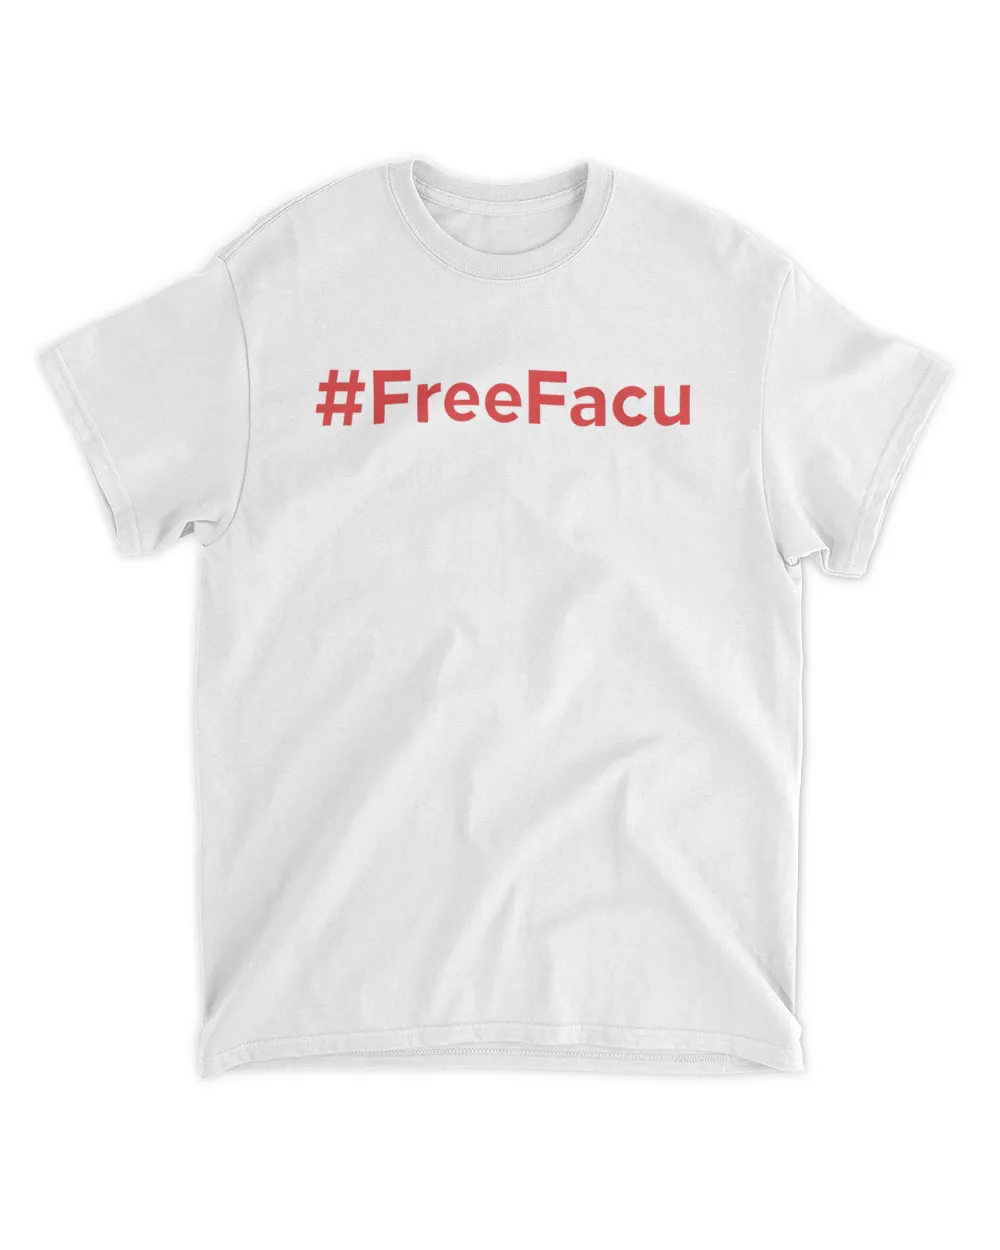 Freefacu Shirt